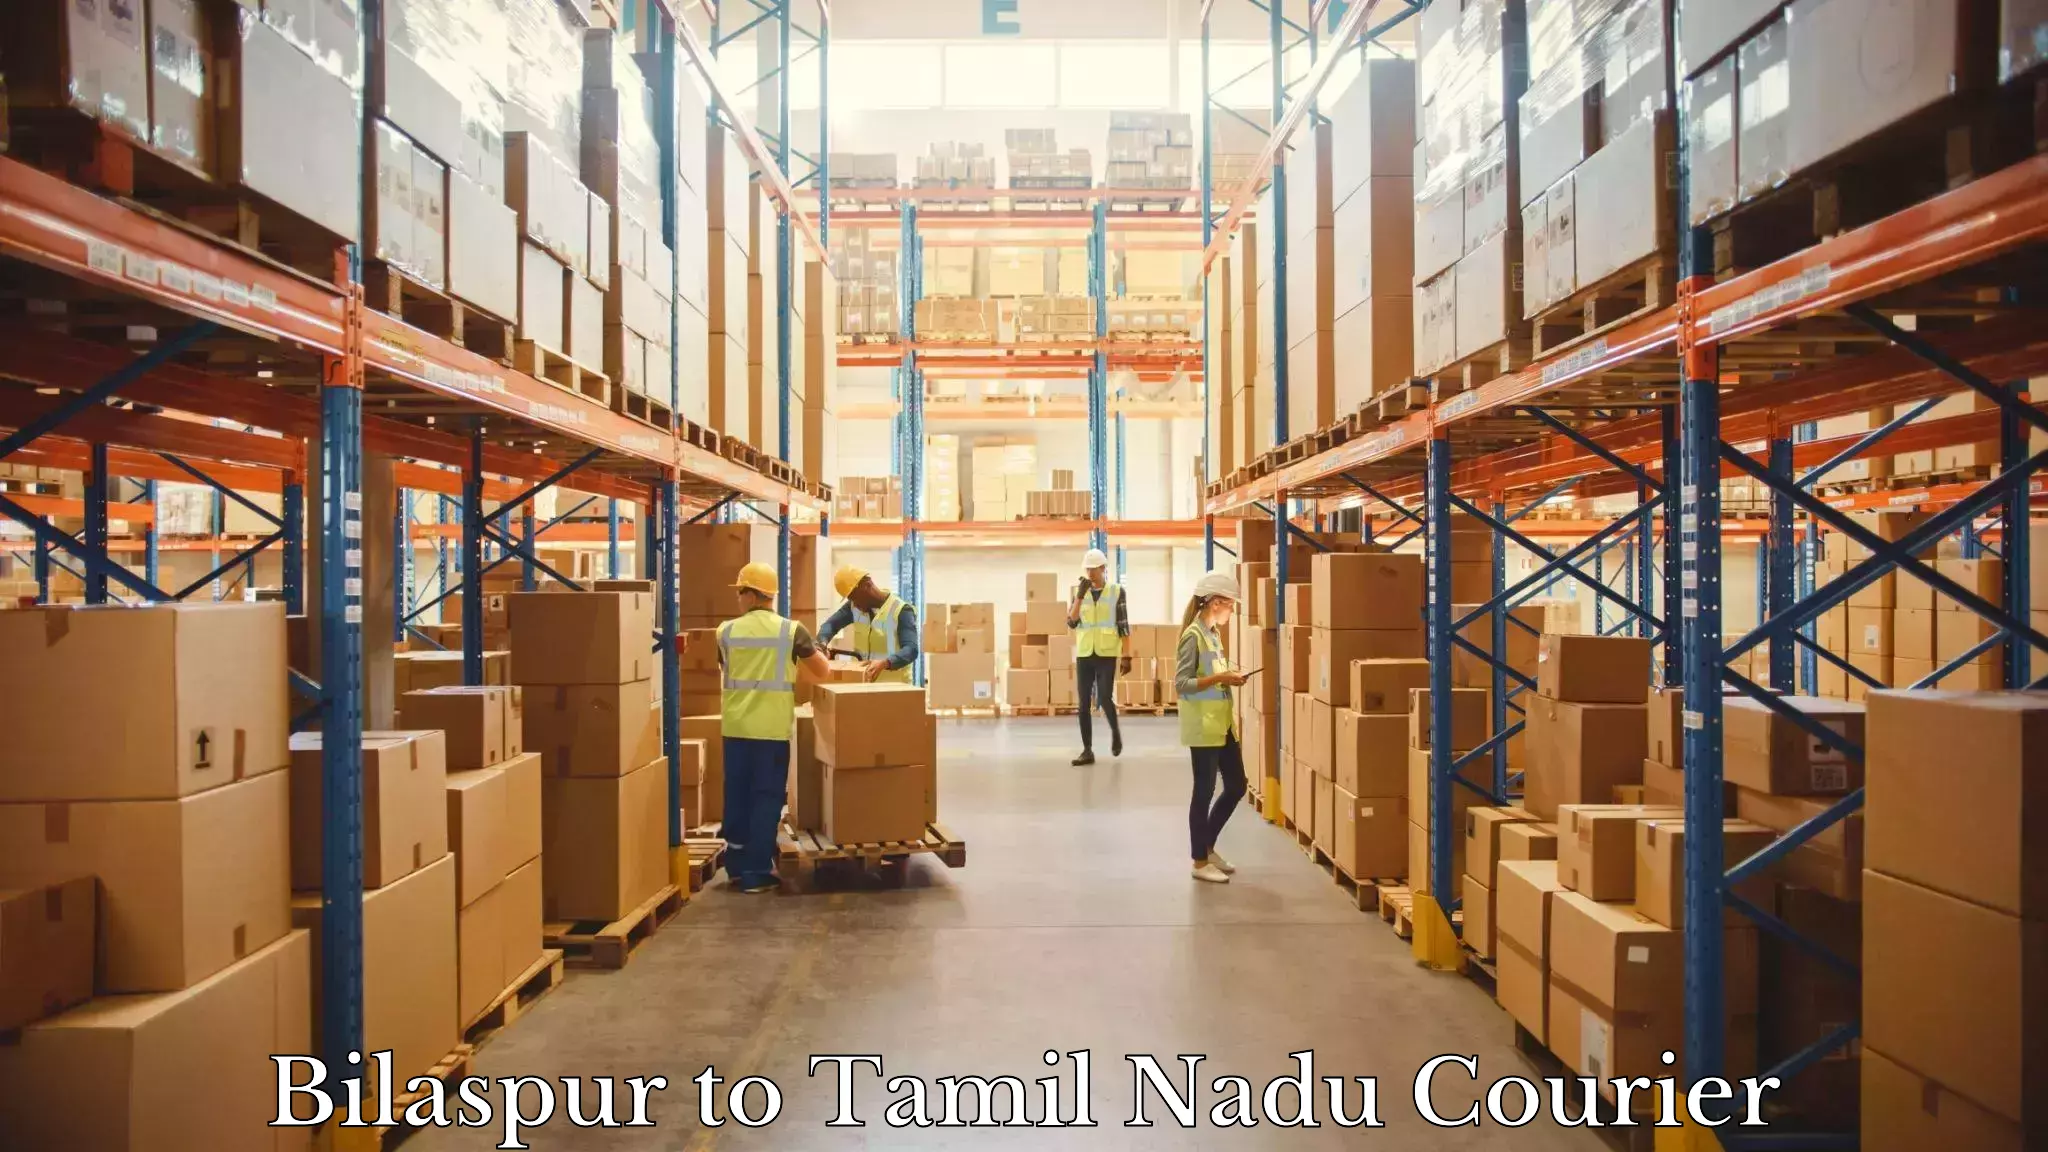 User-friendly delivery service Bilaspur to Tamil Nadu